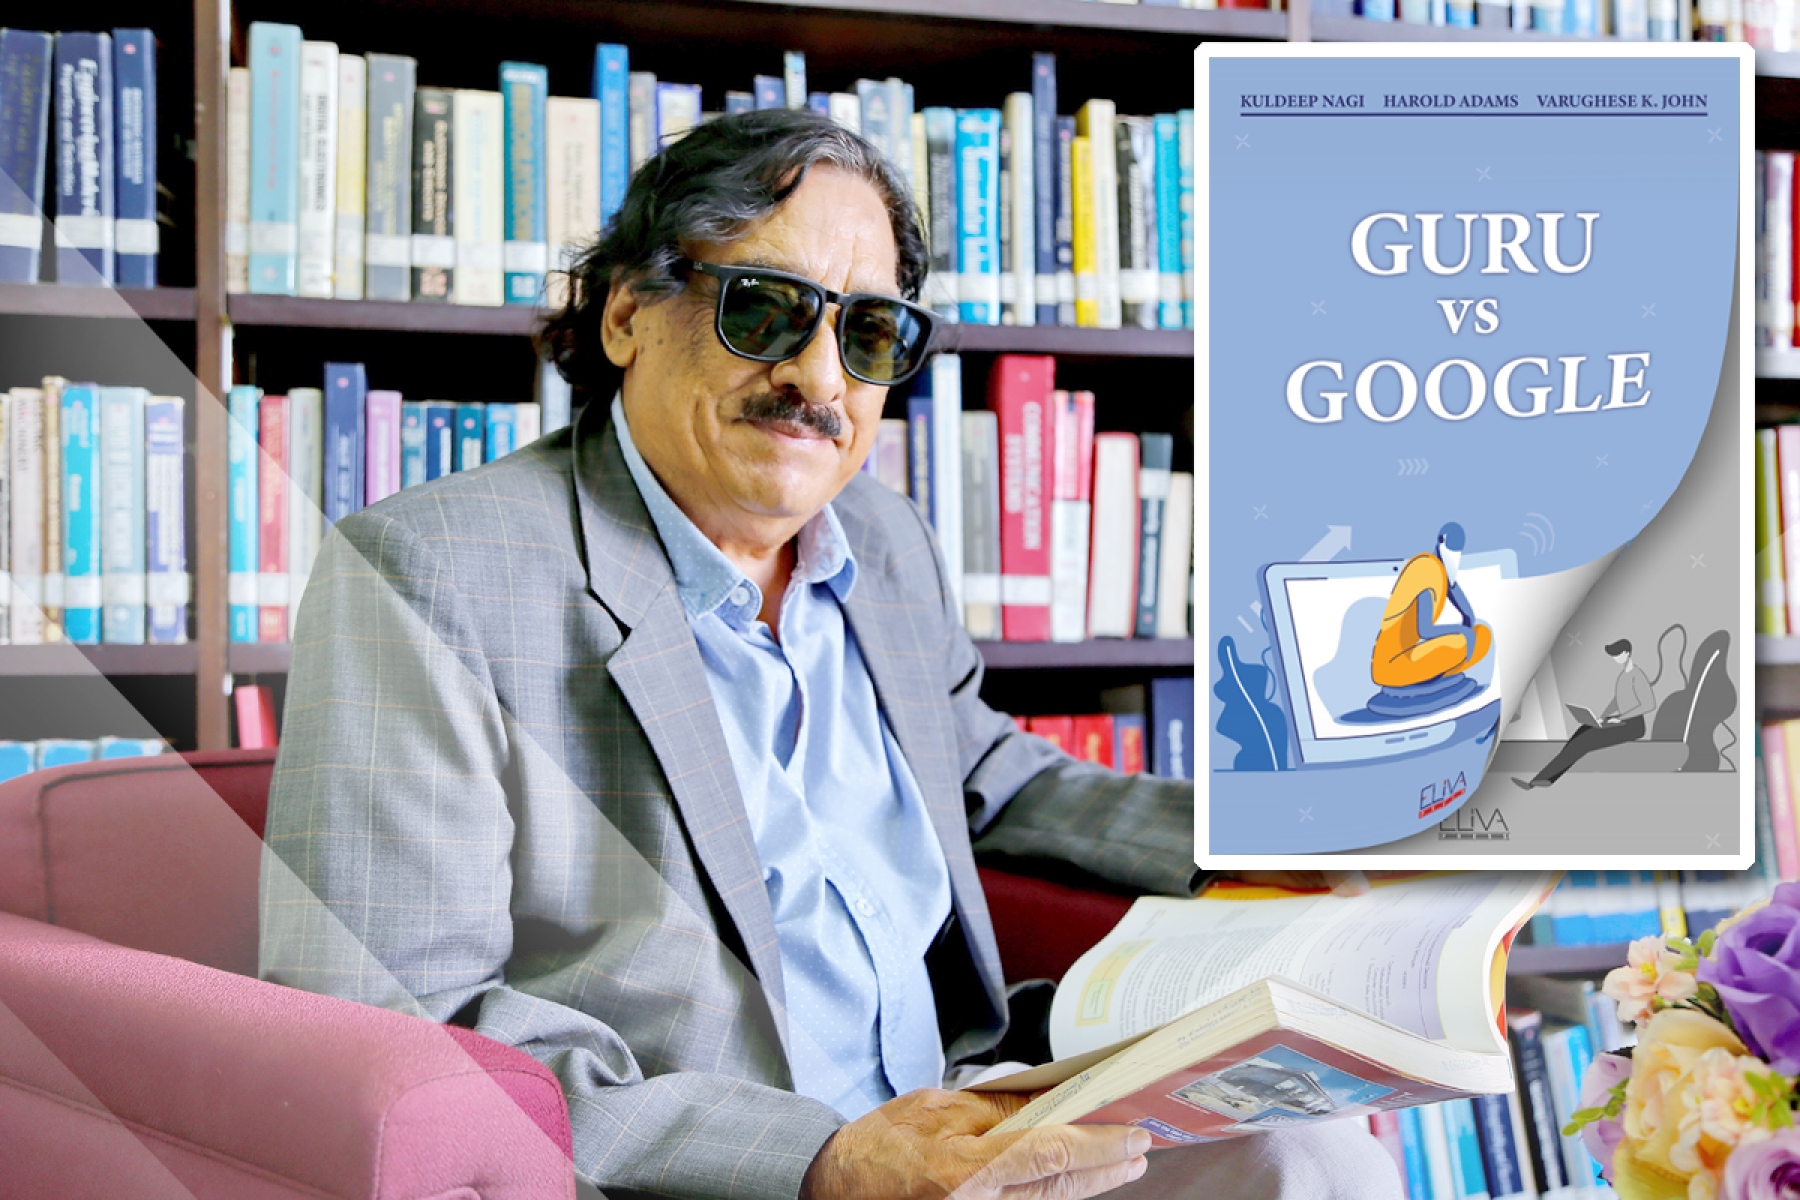 Interviewing Asst. Prof. Dr. Kuldeep Nagi on His New Book “Guru vs Google”